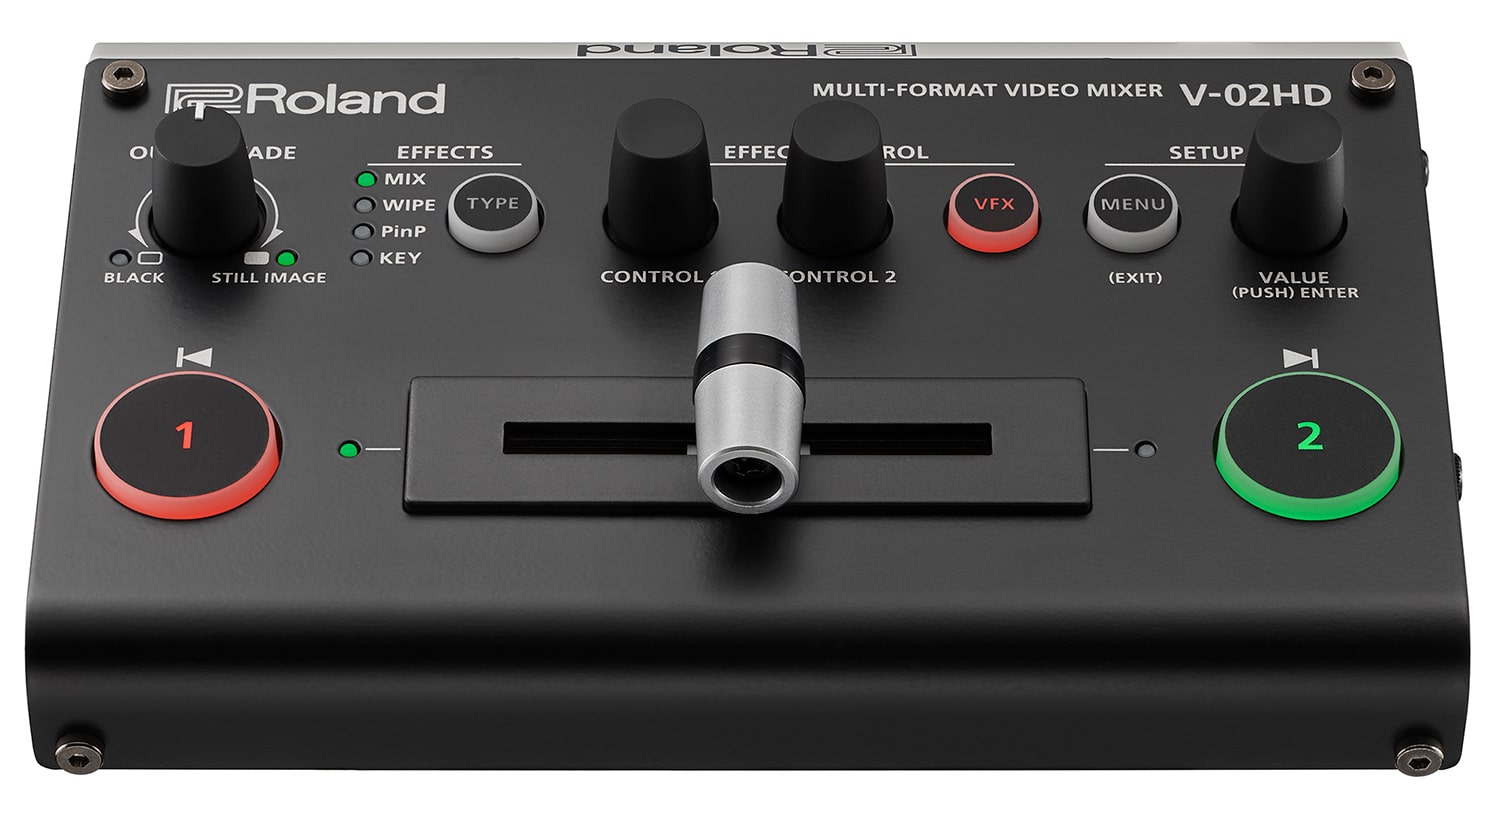 Roland Pro A/V - V-02HD | Multi-Format Video Mixer